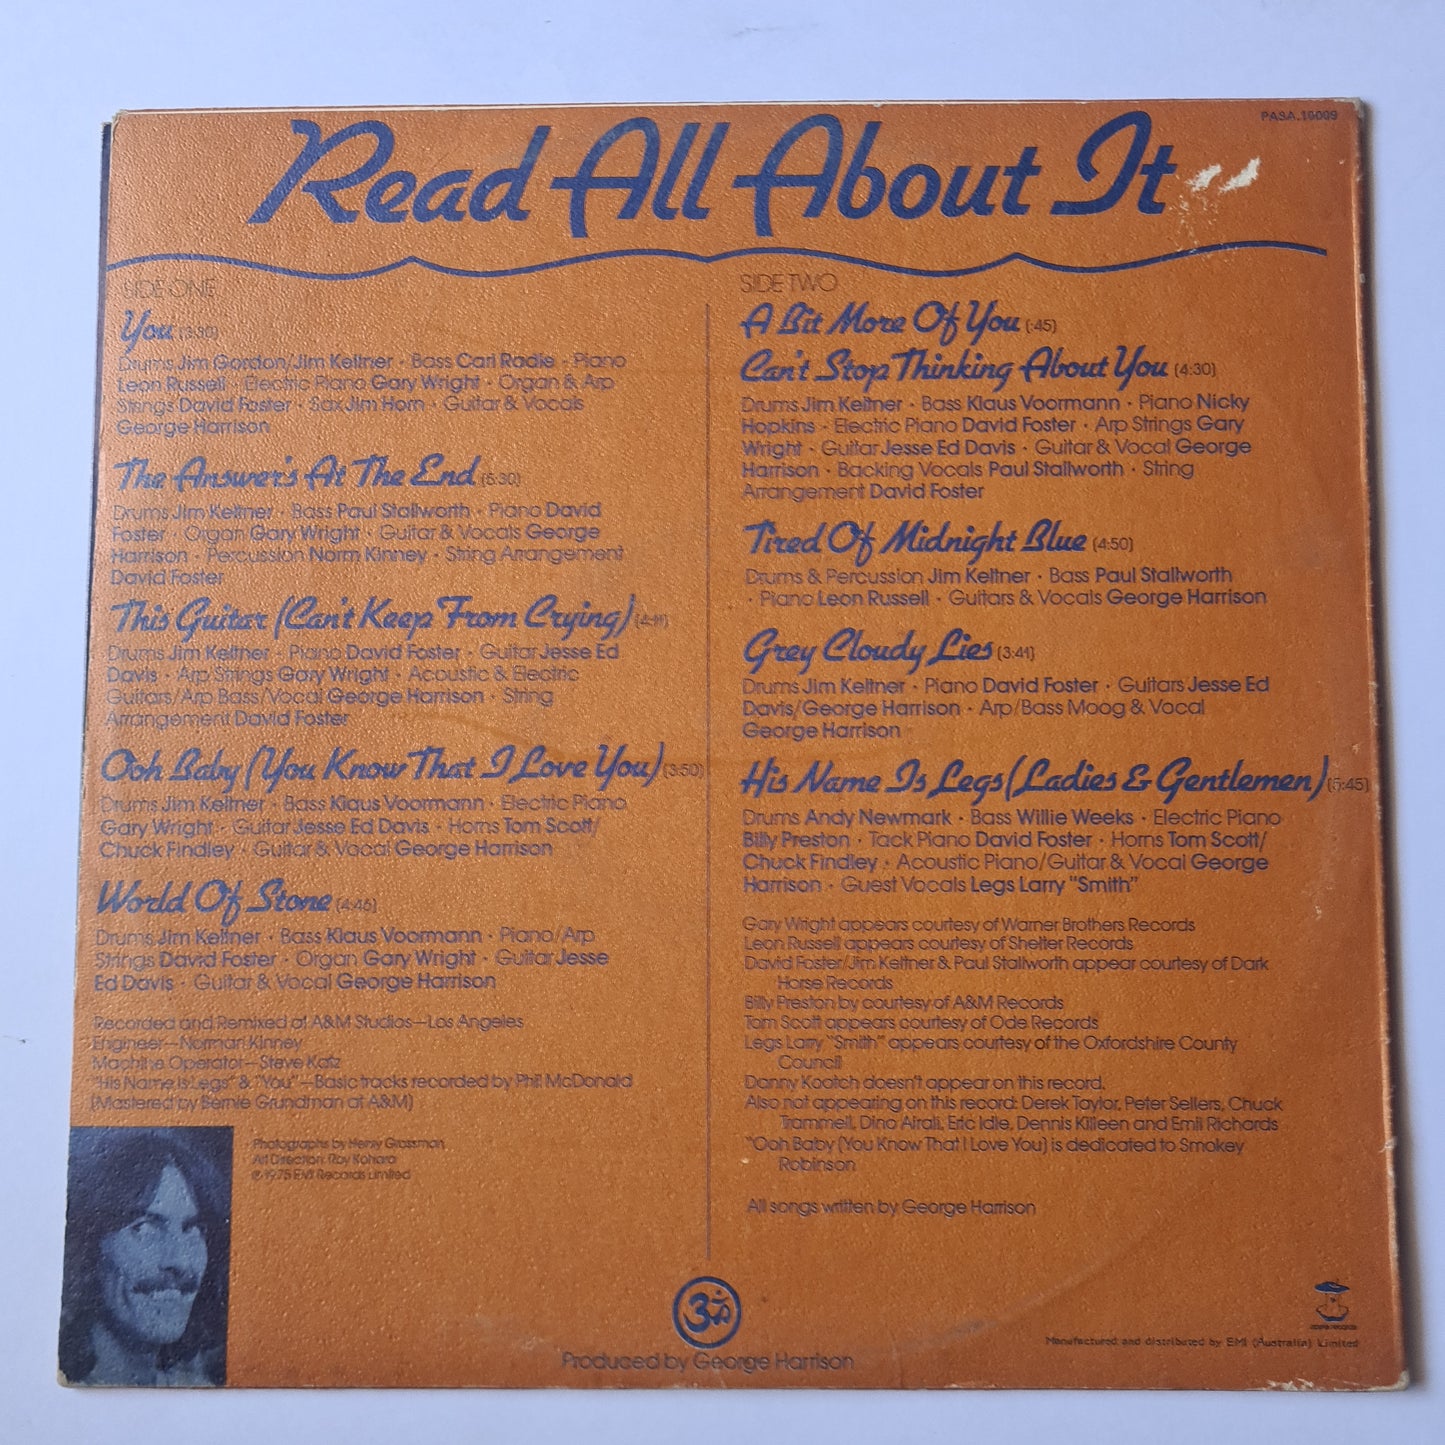 George Harrison – Extra Texture - 1975 - Vinyl Record